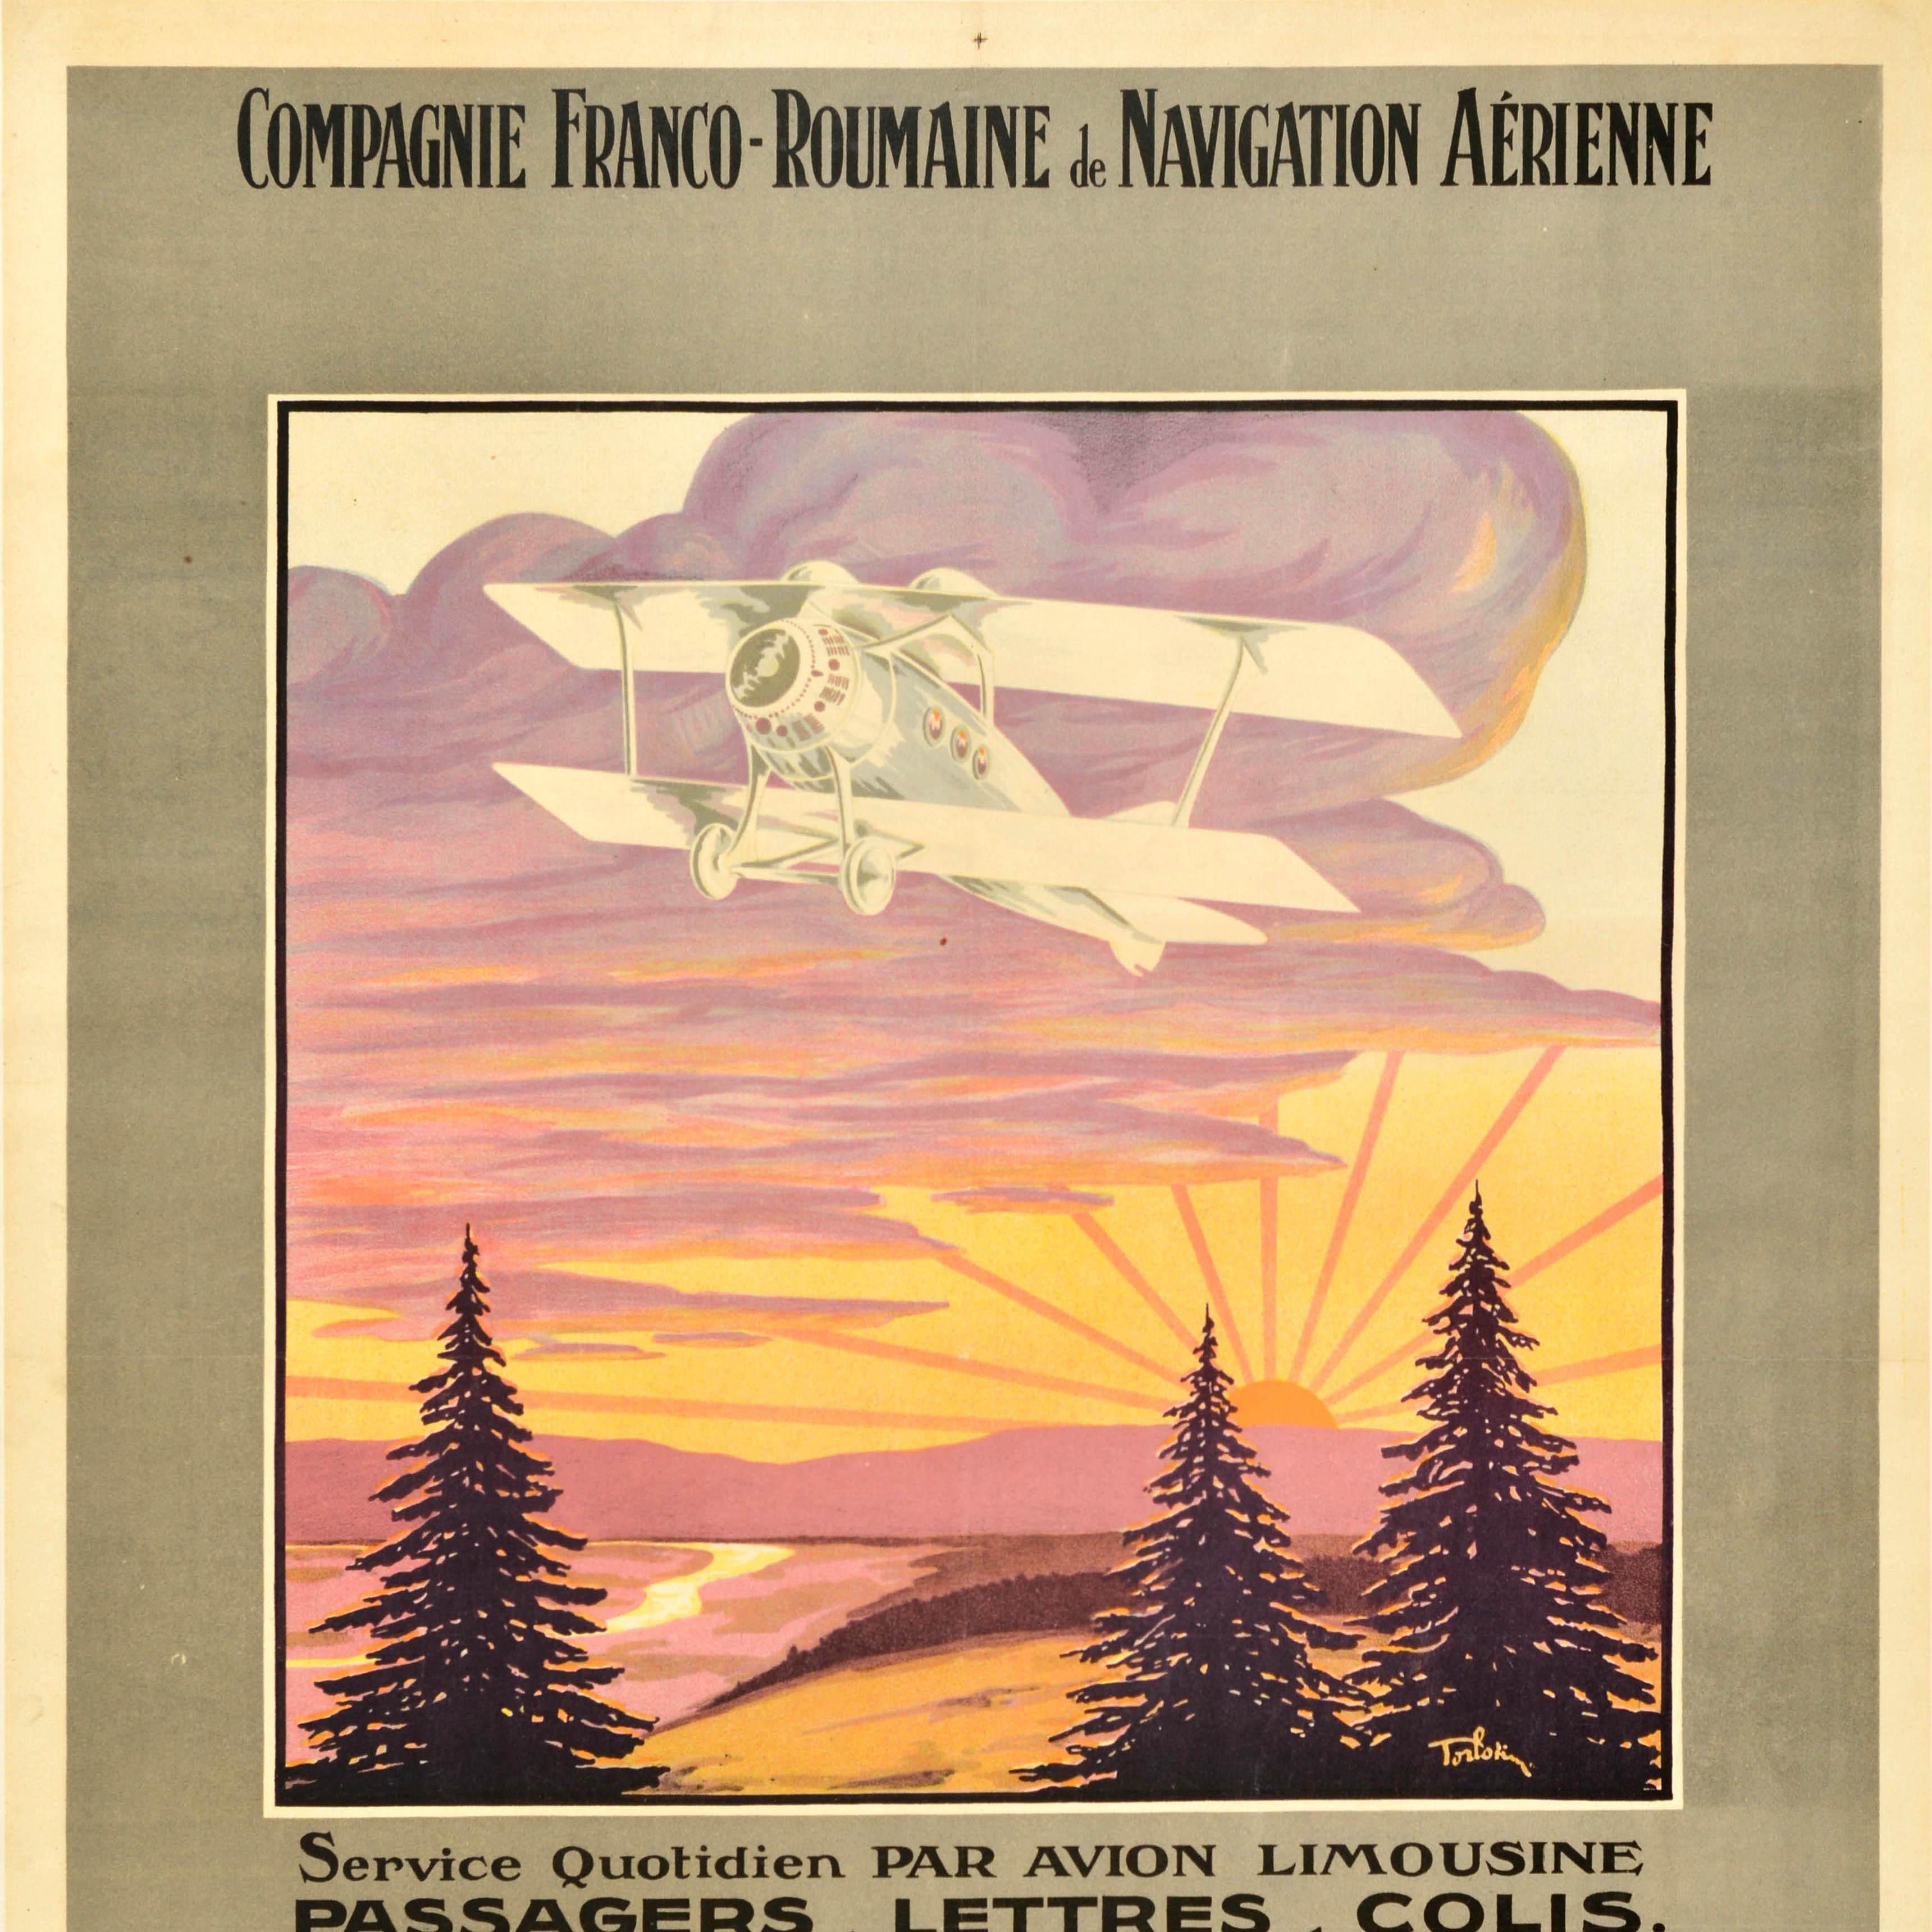 French Original Antique Travel Poster Compagnie Franco Roumaine De Navigation Aerienne For Sale